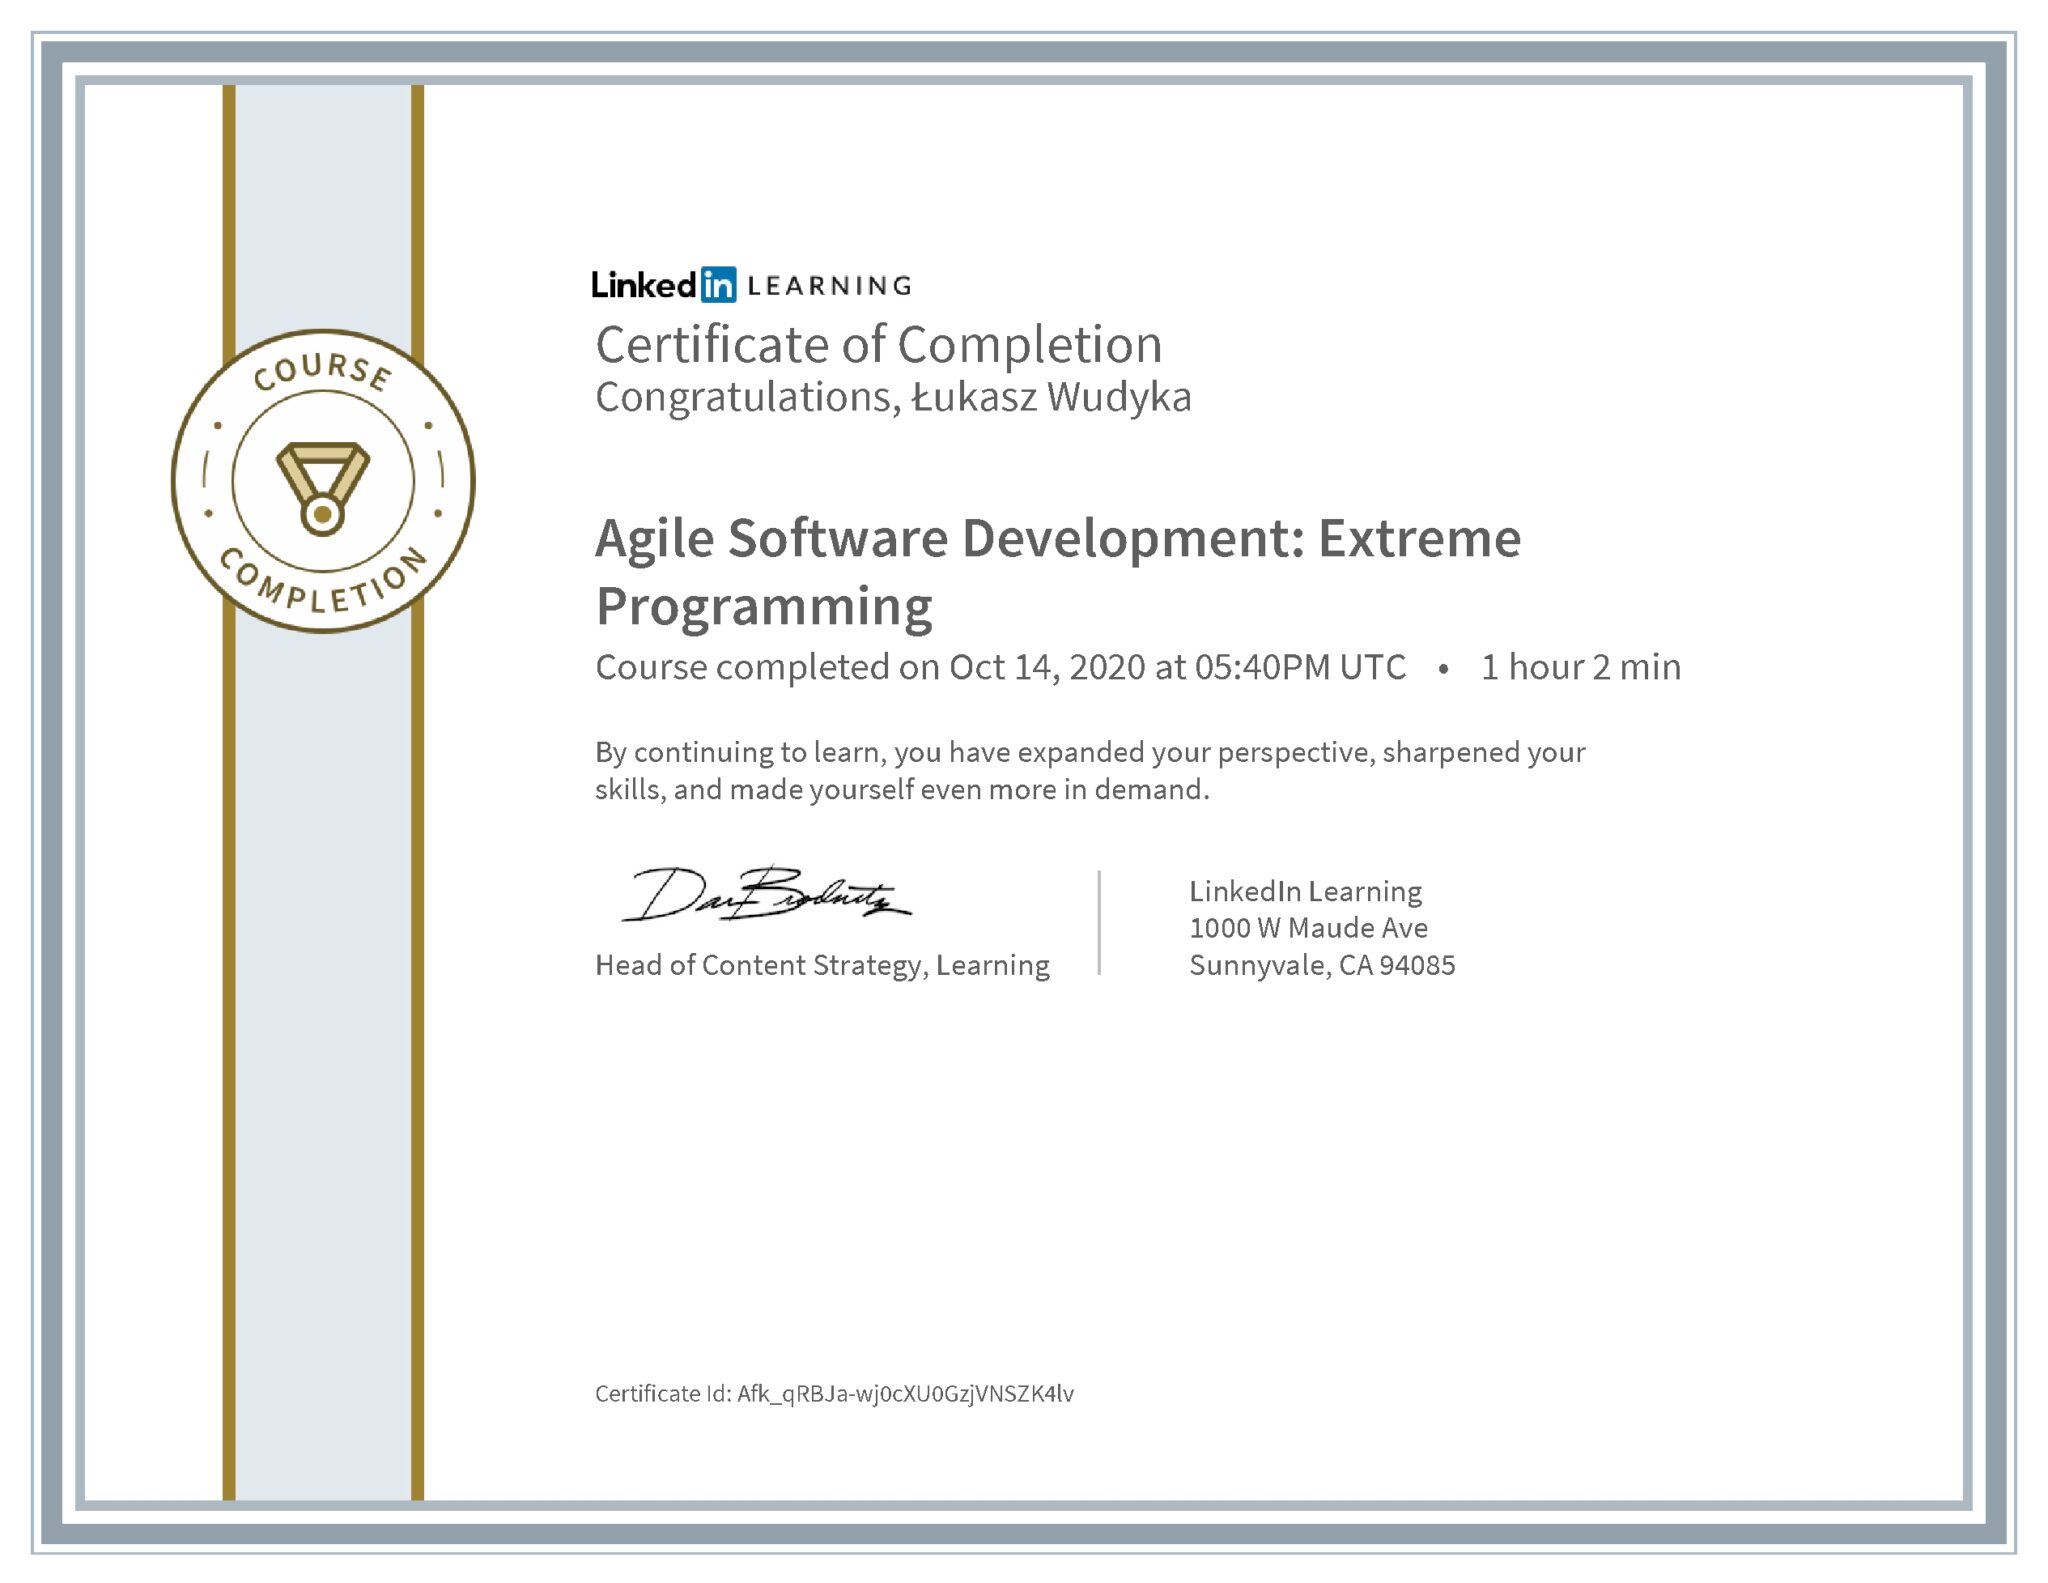 Łukasz Wudyka certyfikat LinkedIn Agile Software Development: Extreme Programming